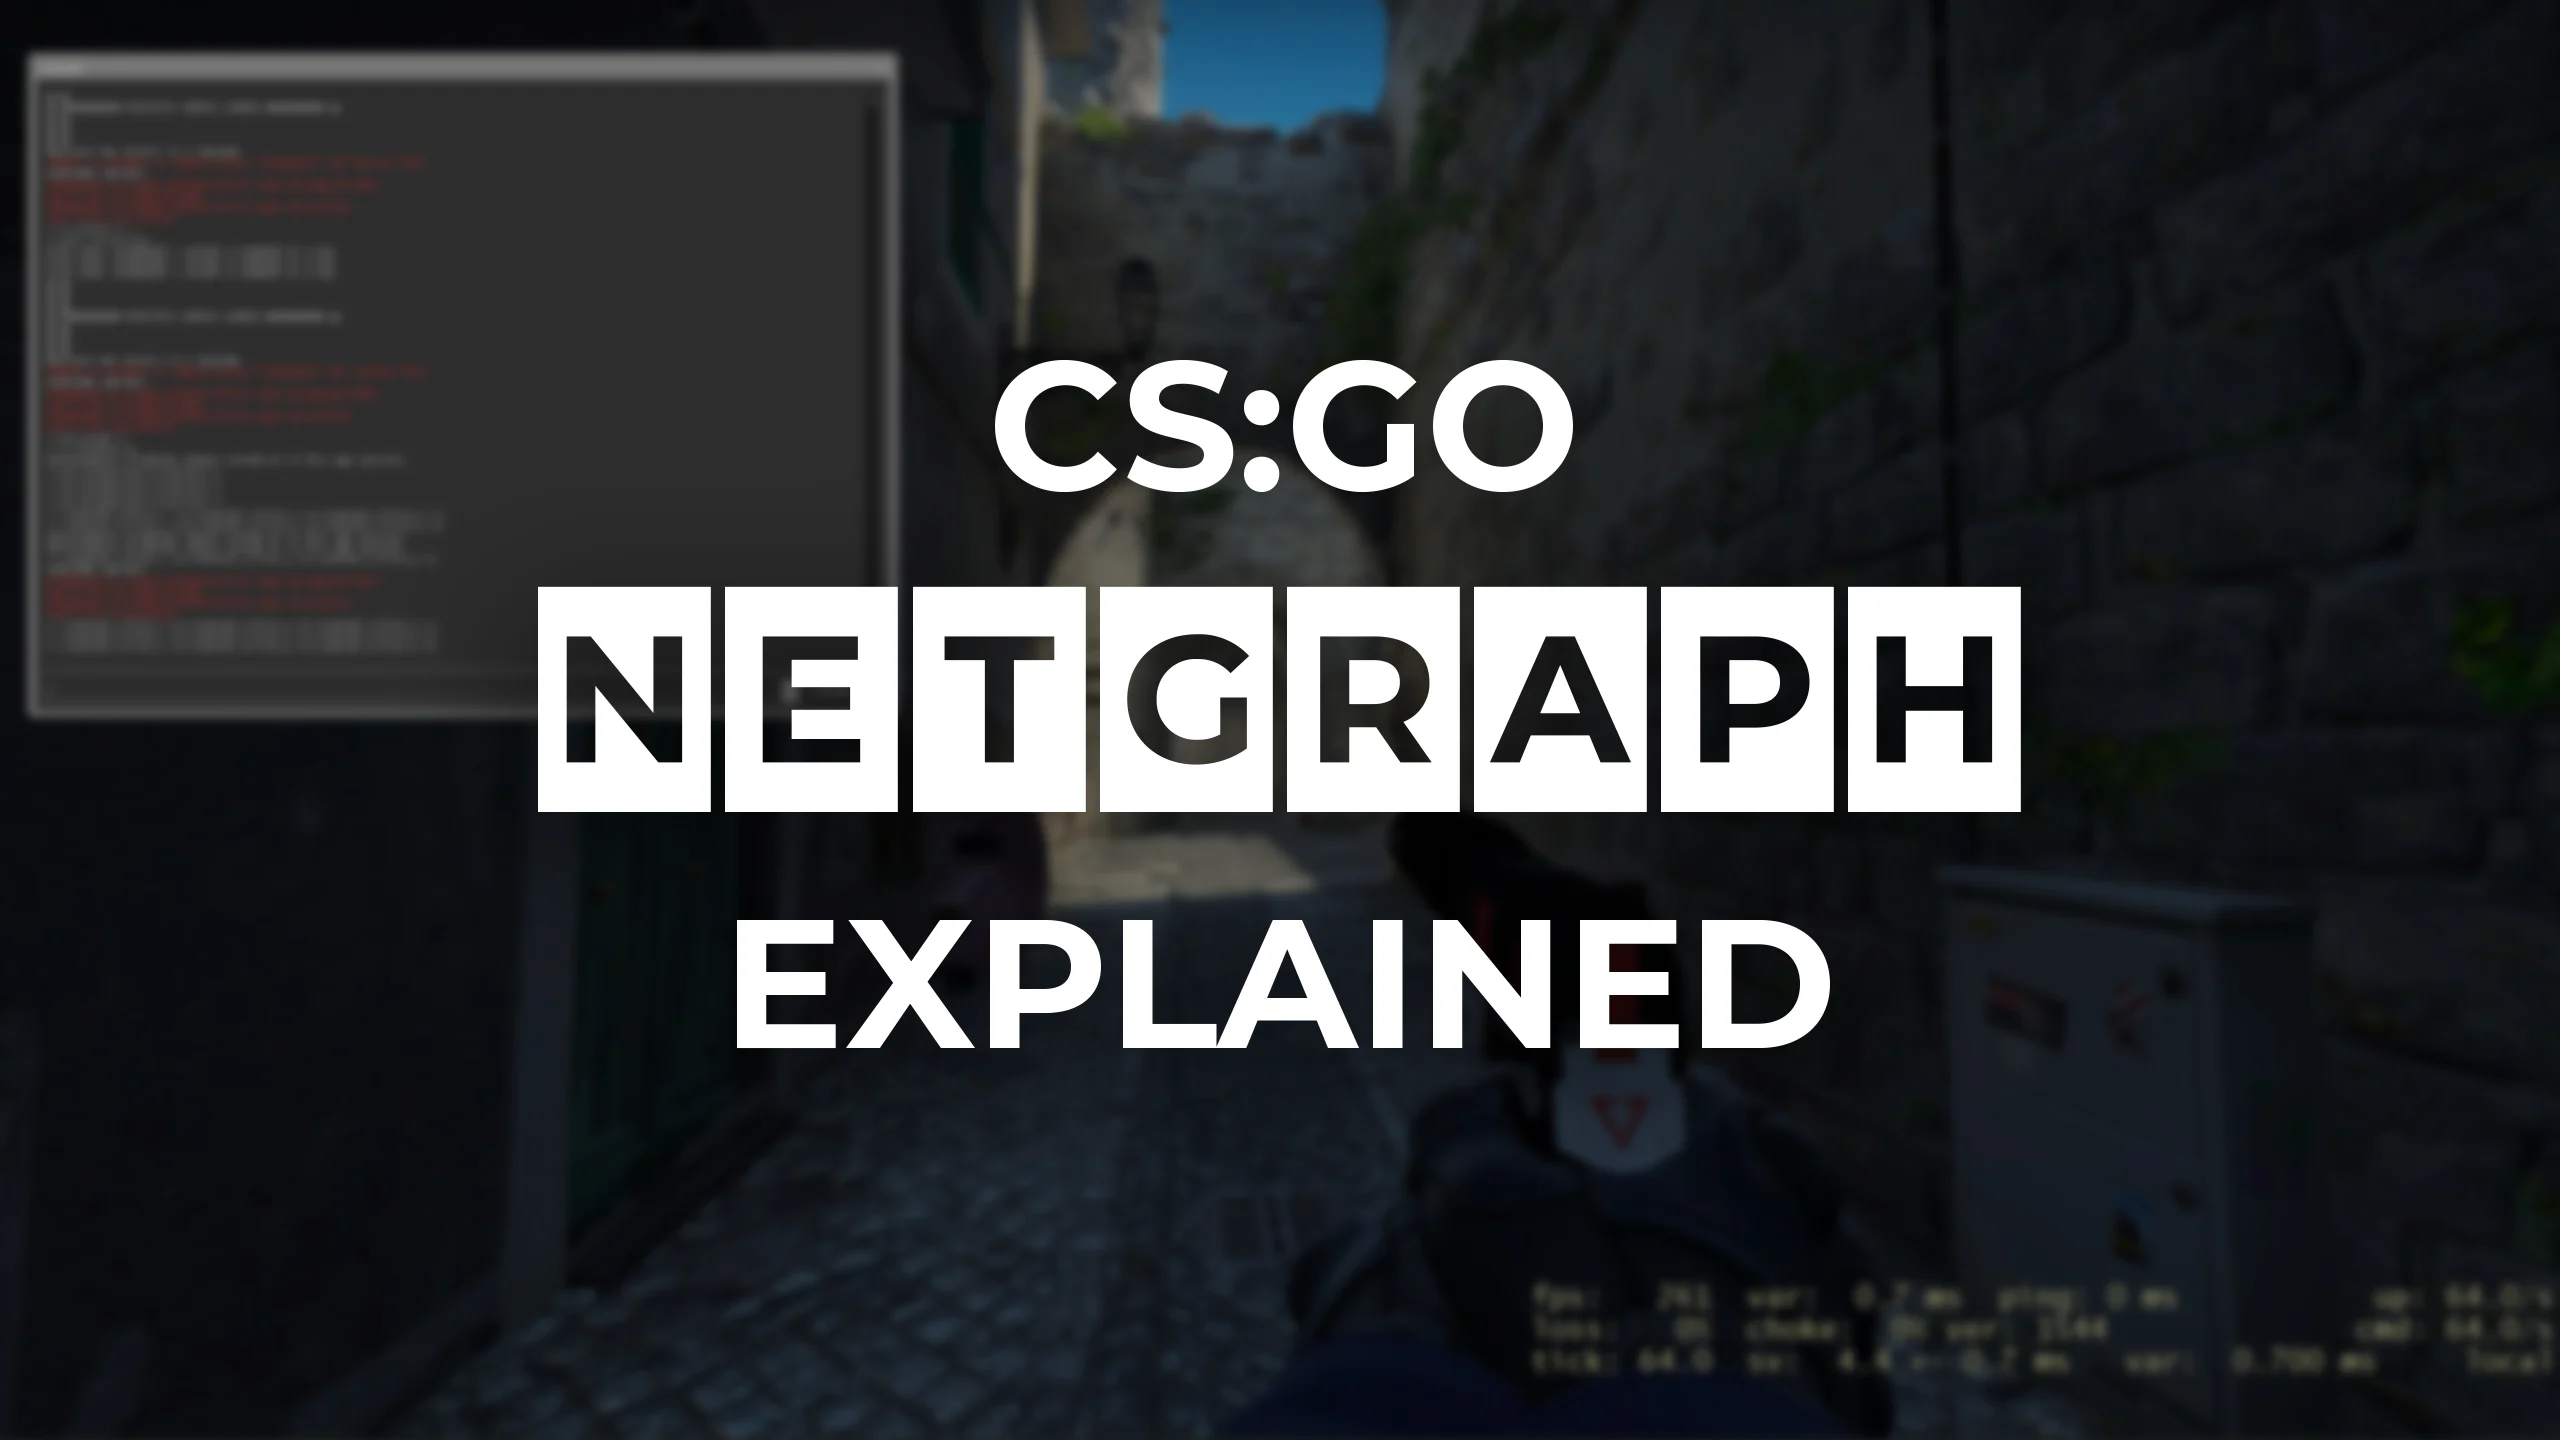 CS:GO Netgraph Explained